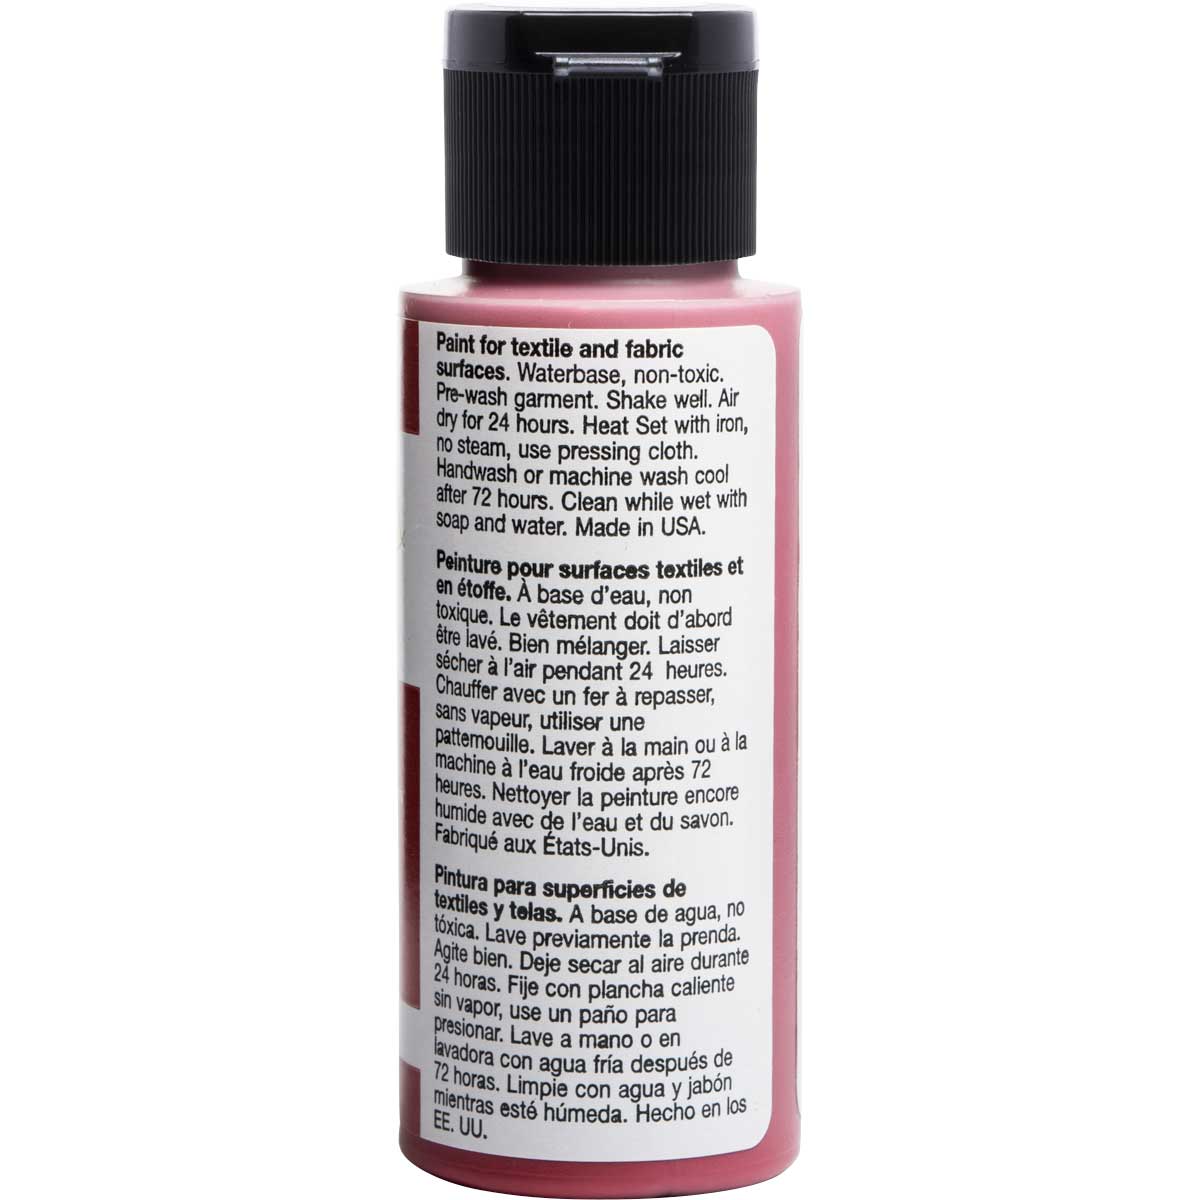 FolkArt ® Fabric™ Paint - Brush On - Engine Red - 4405